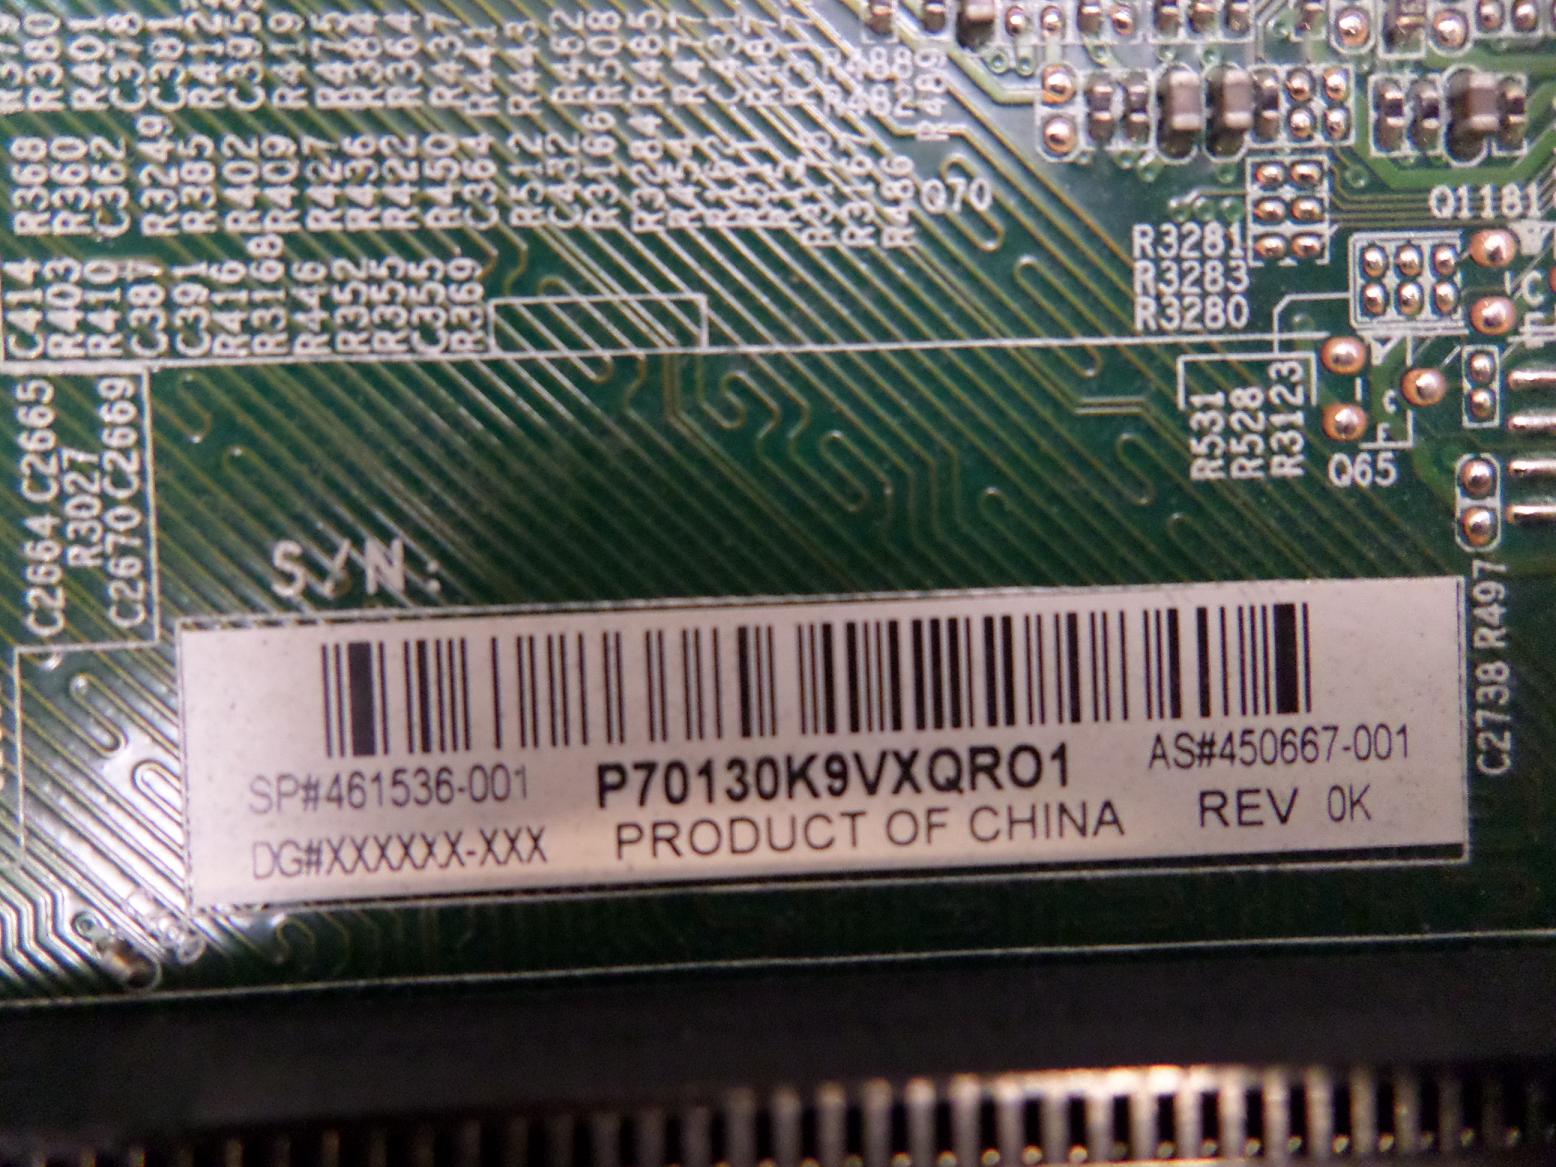 PR24520_461536-001_Compaq DC5800 SFF Intel LGA755 Motherboard - Image4